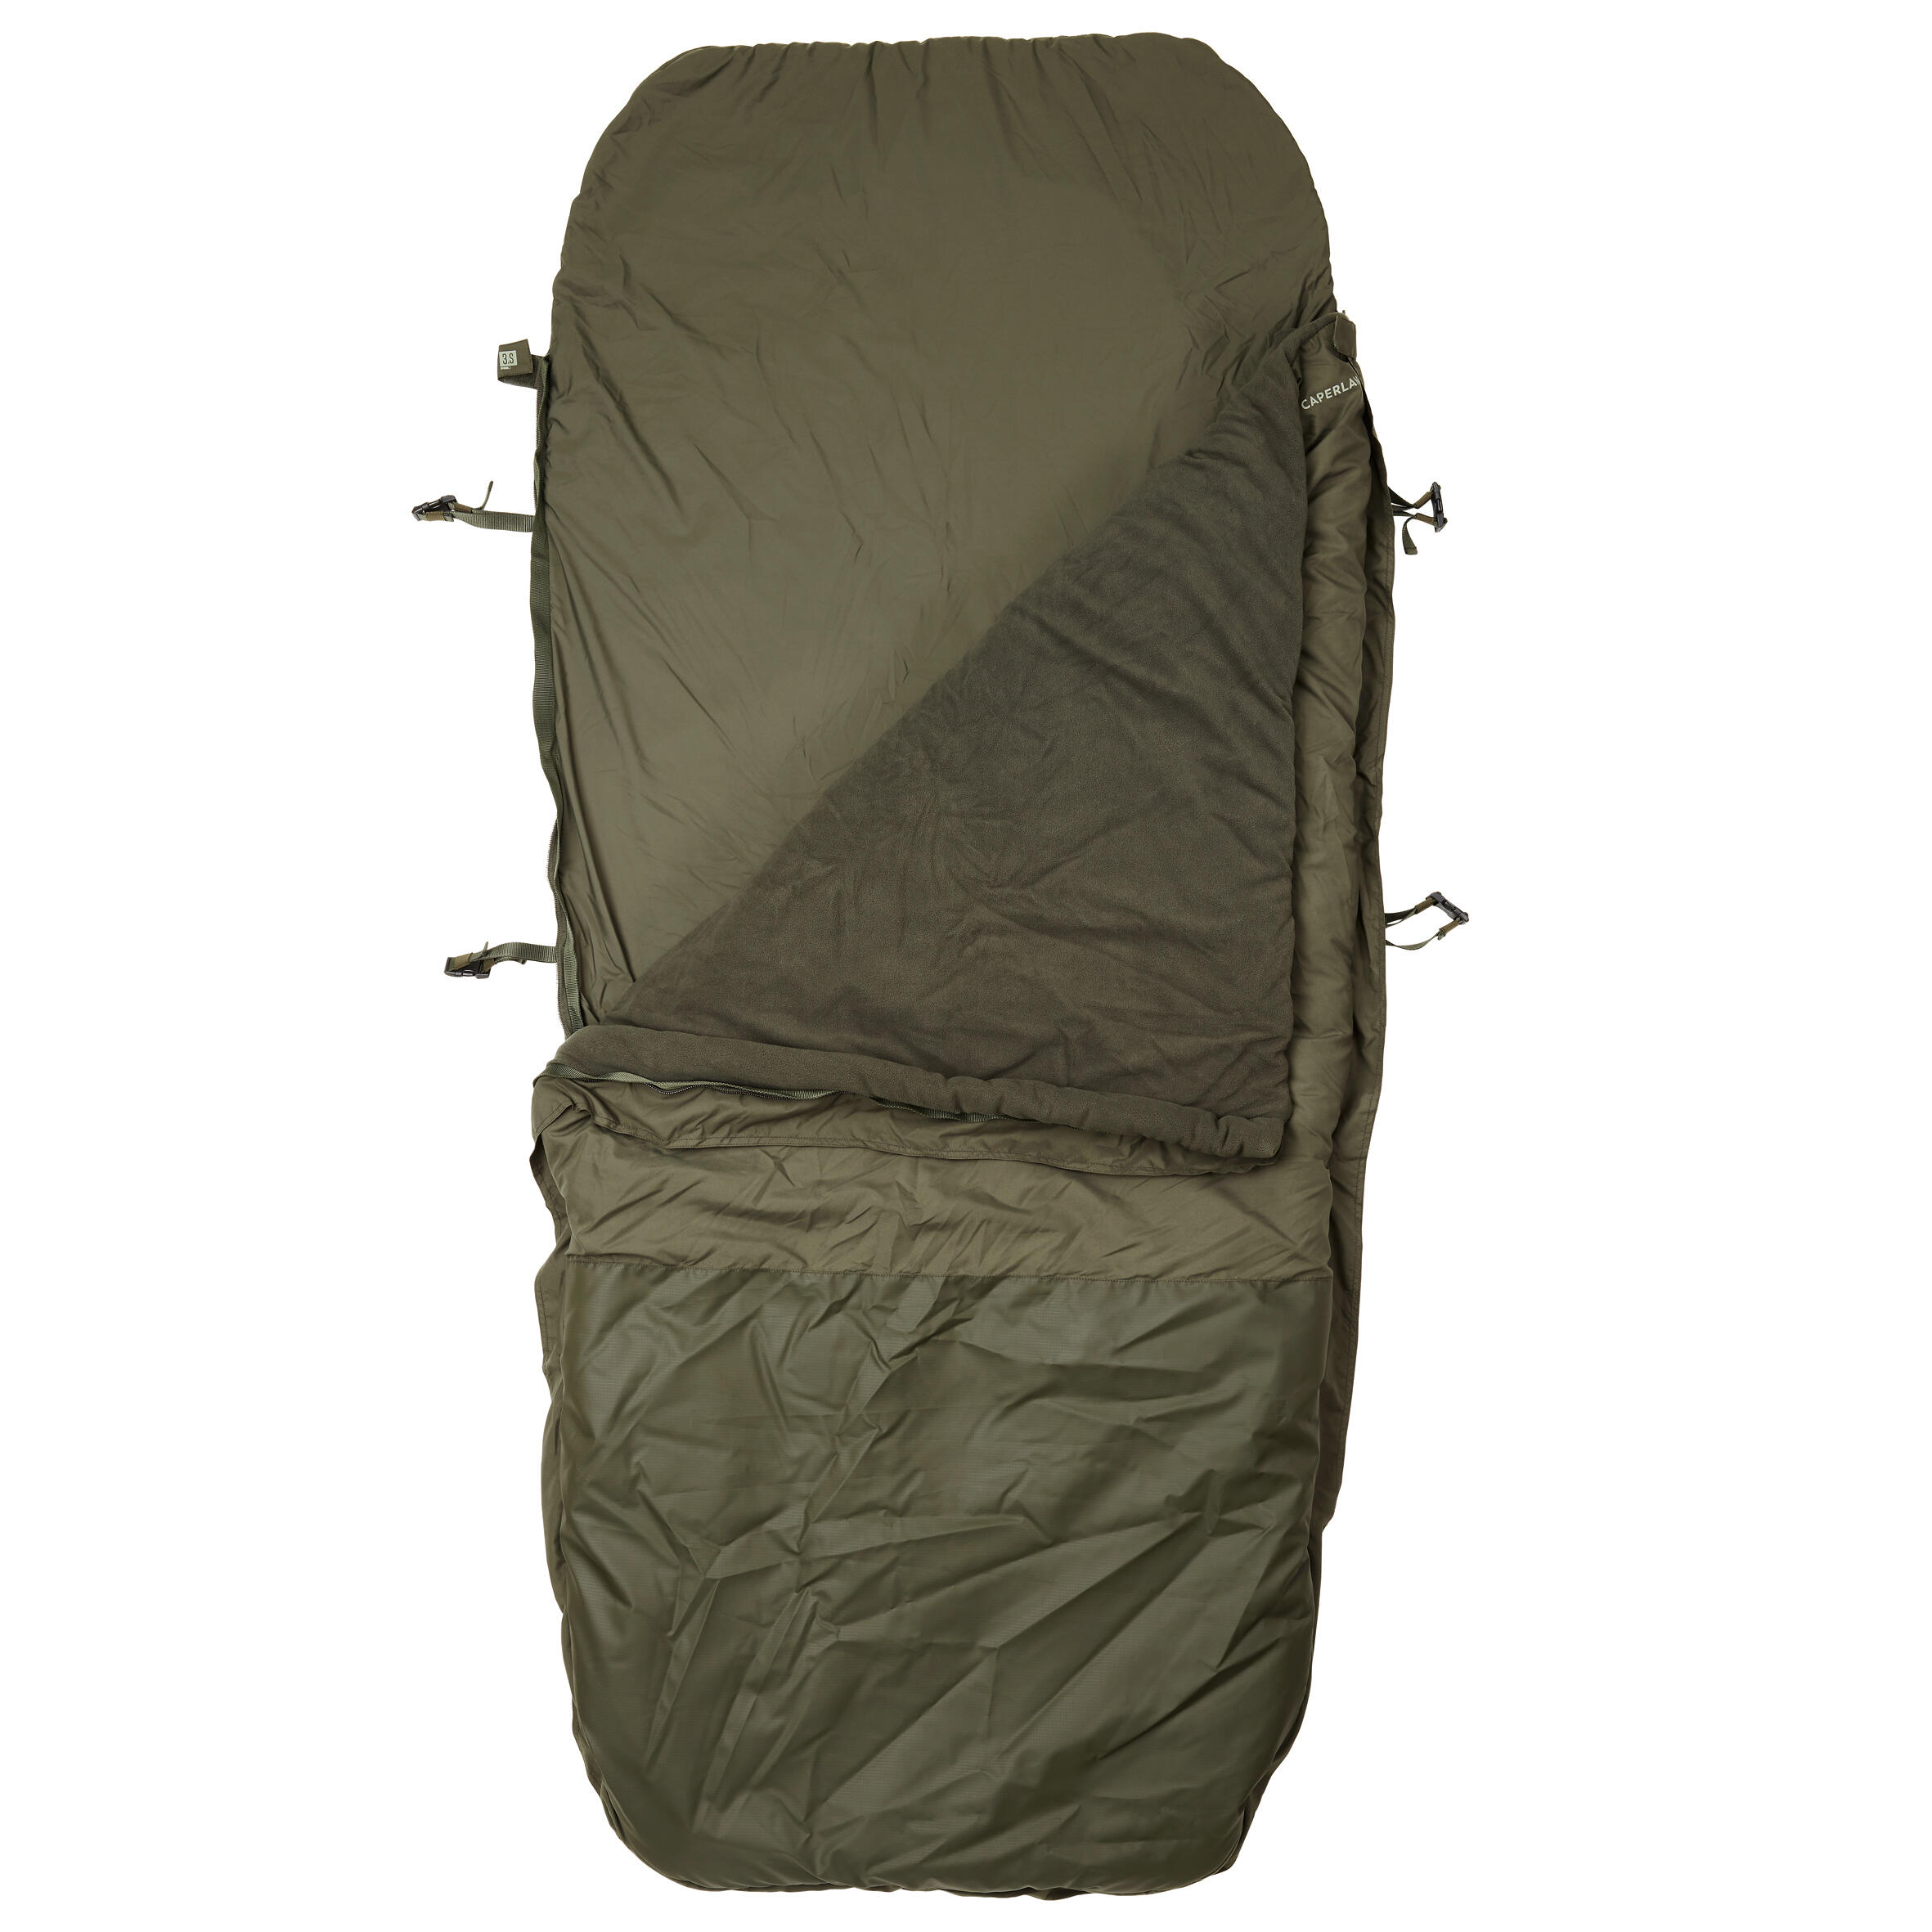 3-season sleeping bag for carp fishing 1/9